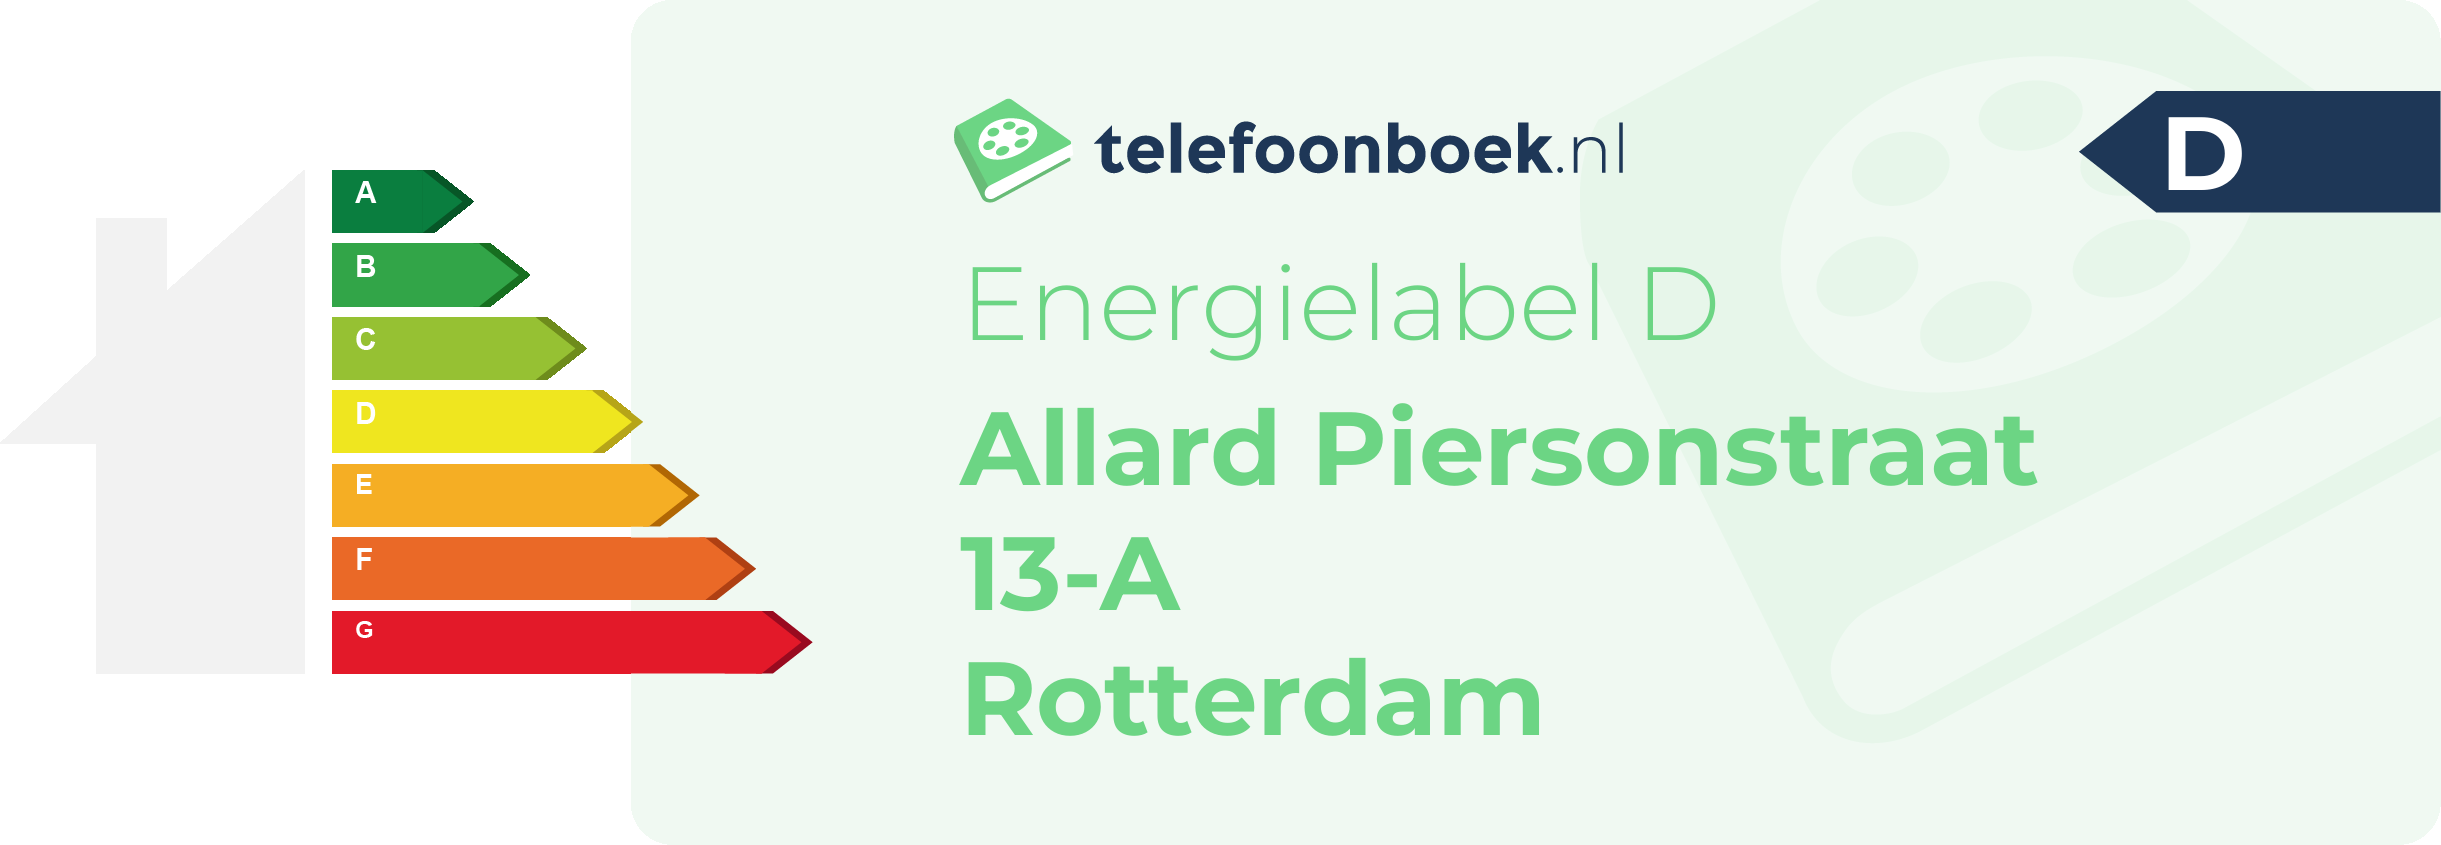 Energielabel Allard Piersonstraat 13-A Rotterdam